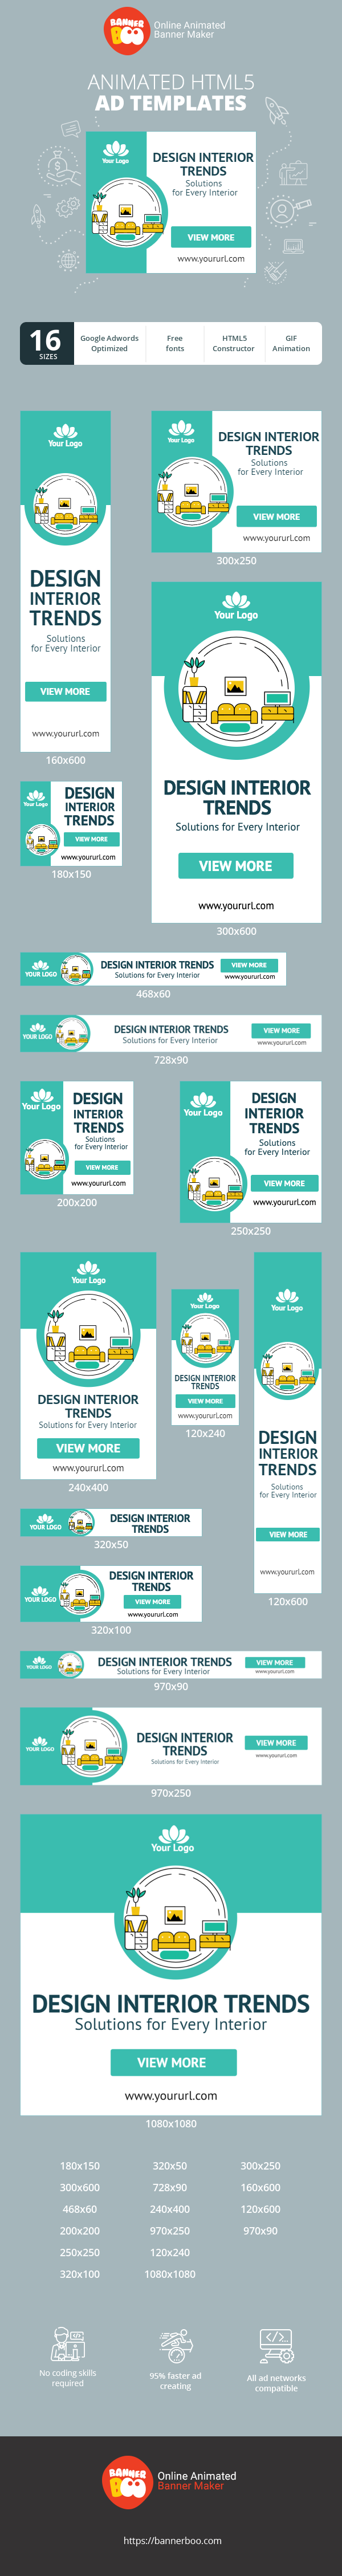 Шаблон рекламного банера — Design Interior Trends — Solutions for Every Interior